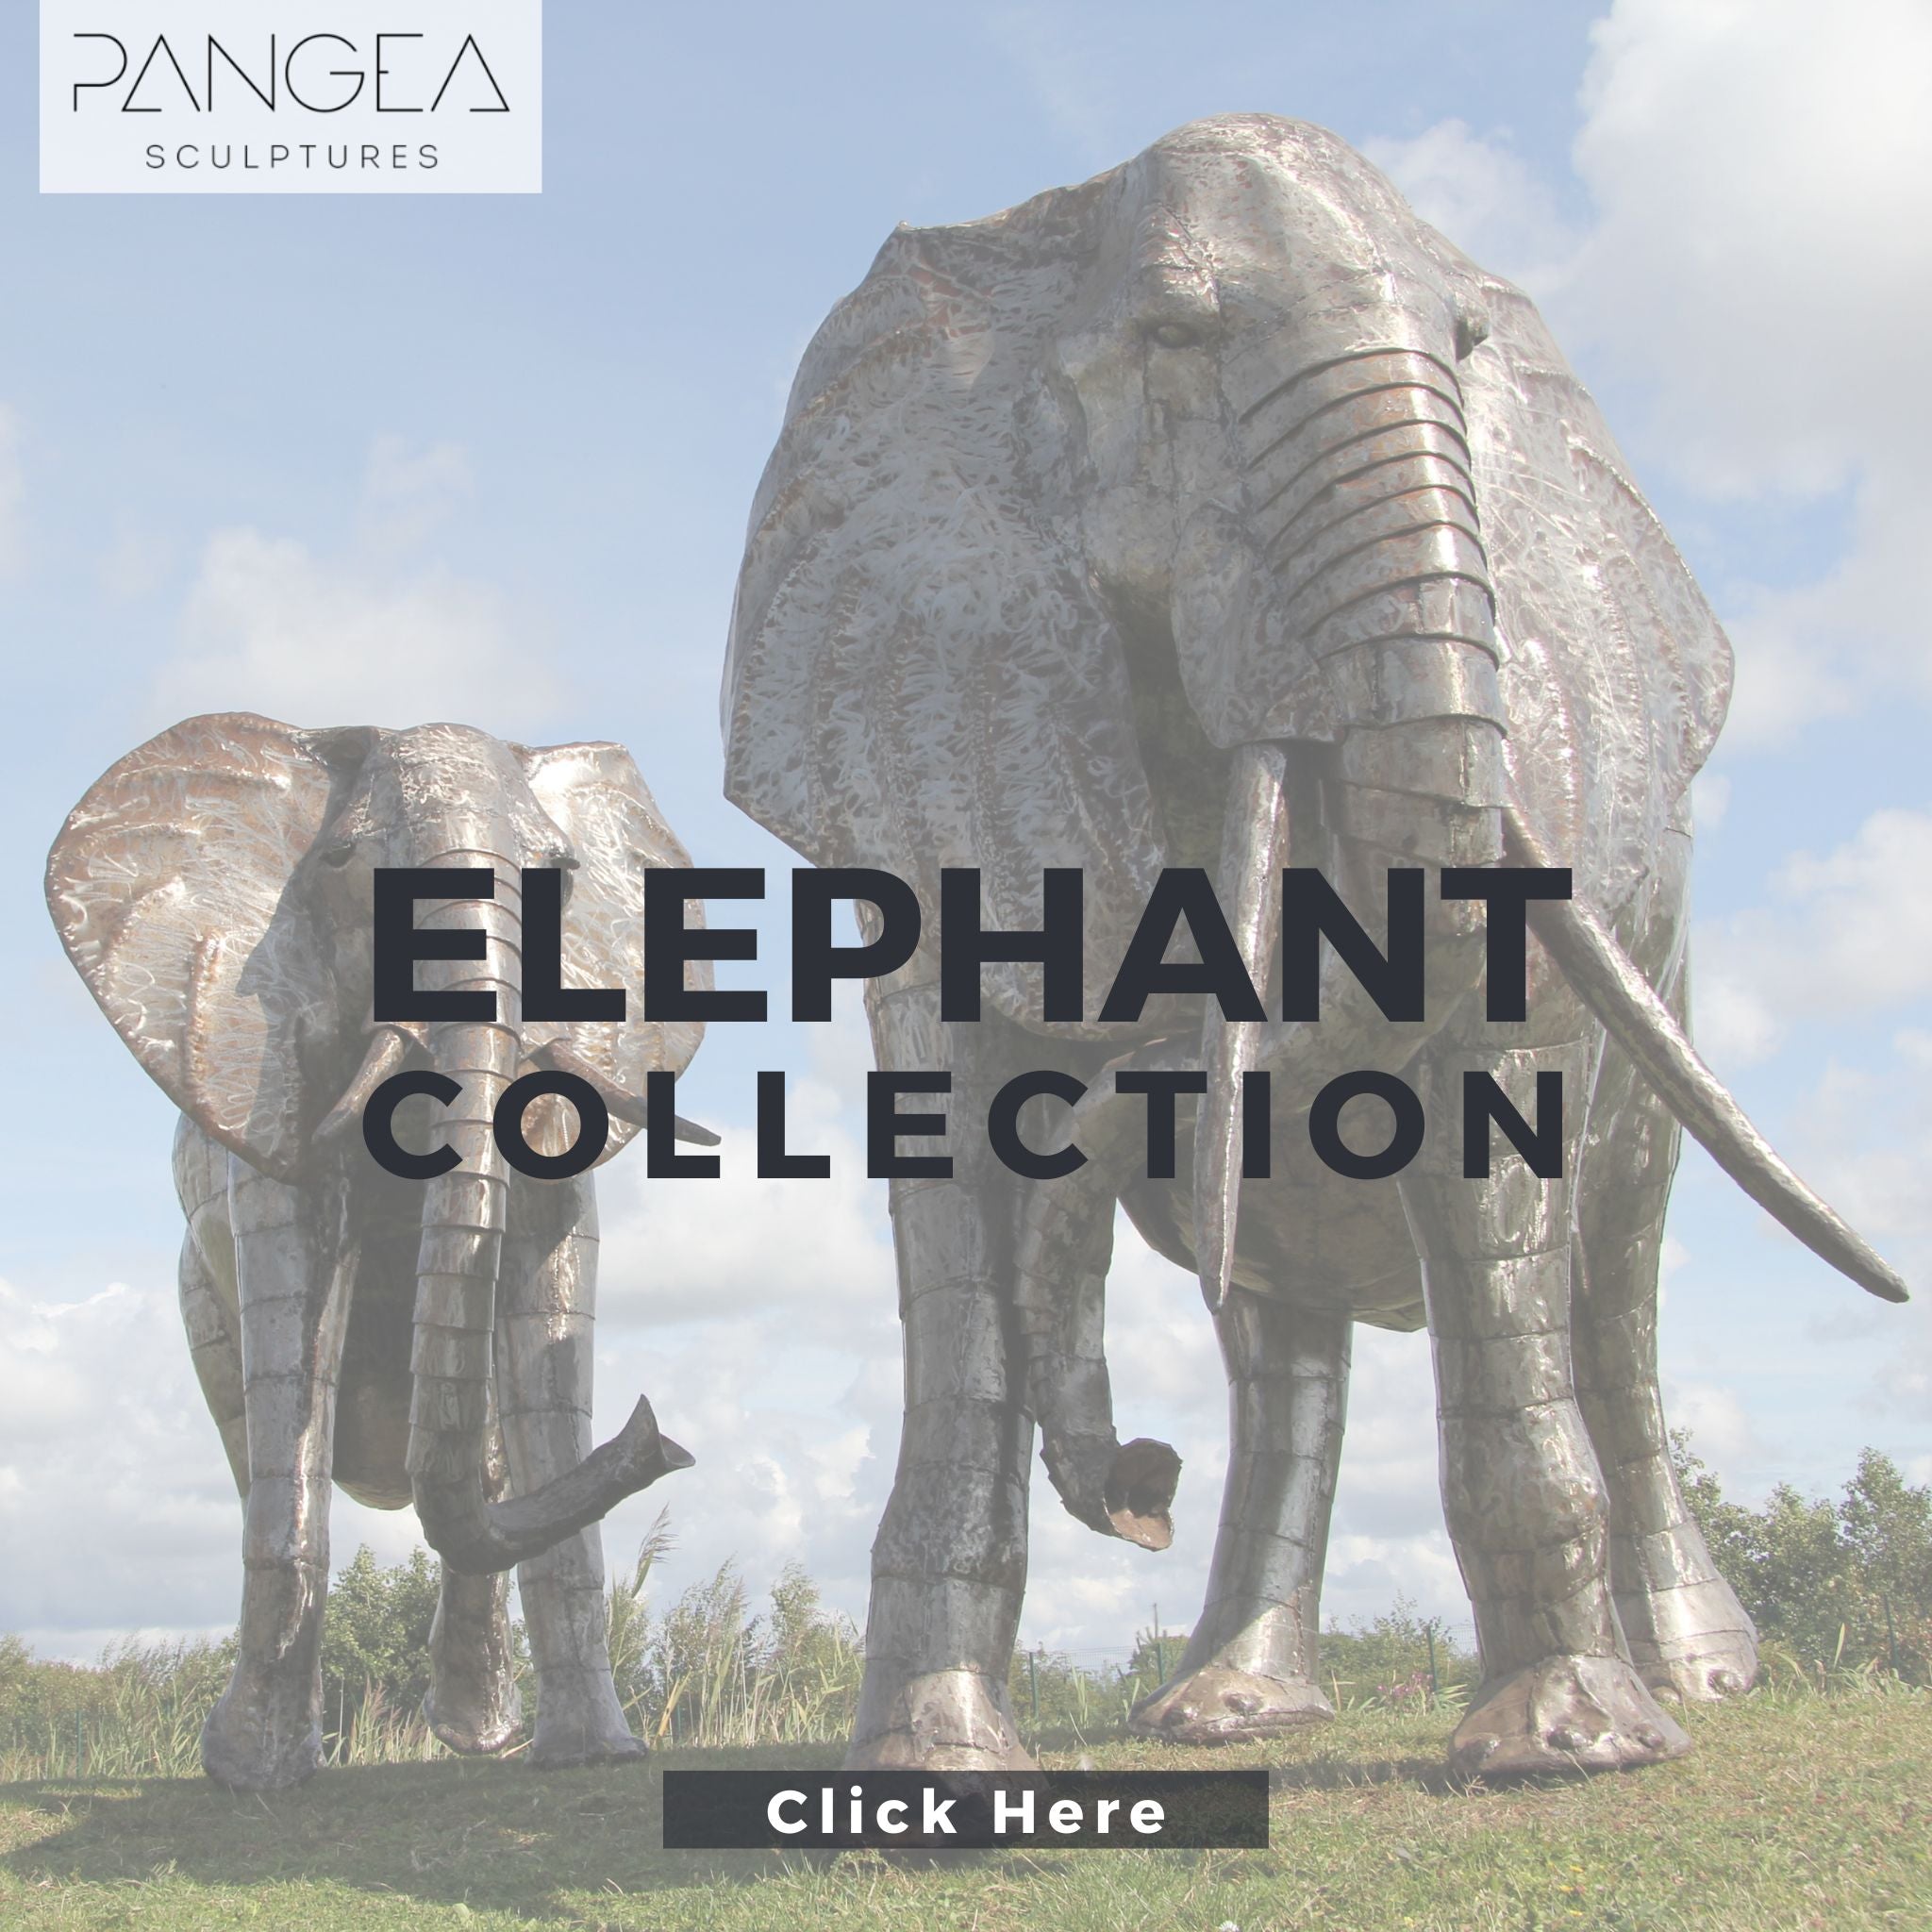 Elephant Sculptures - Pangea Sculptures